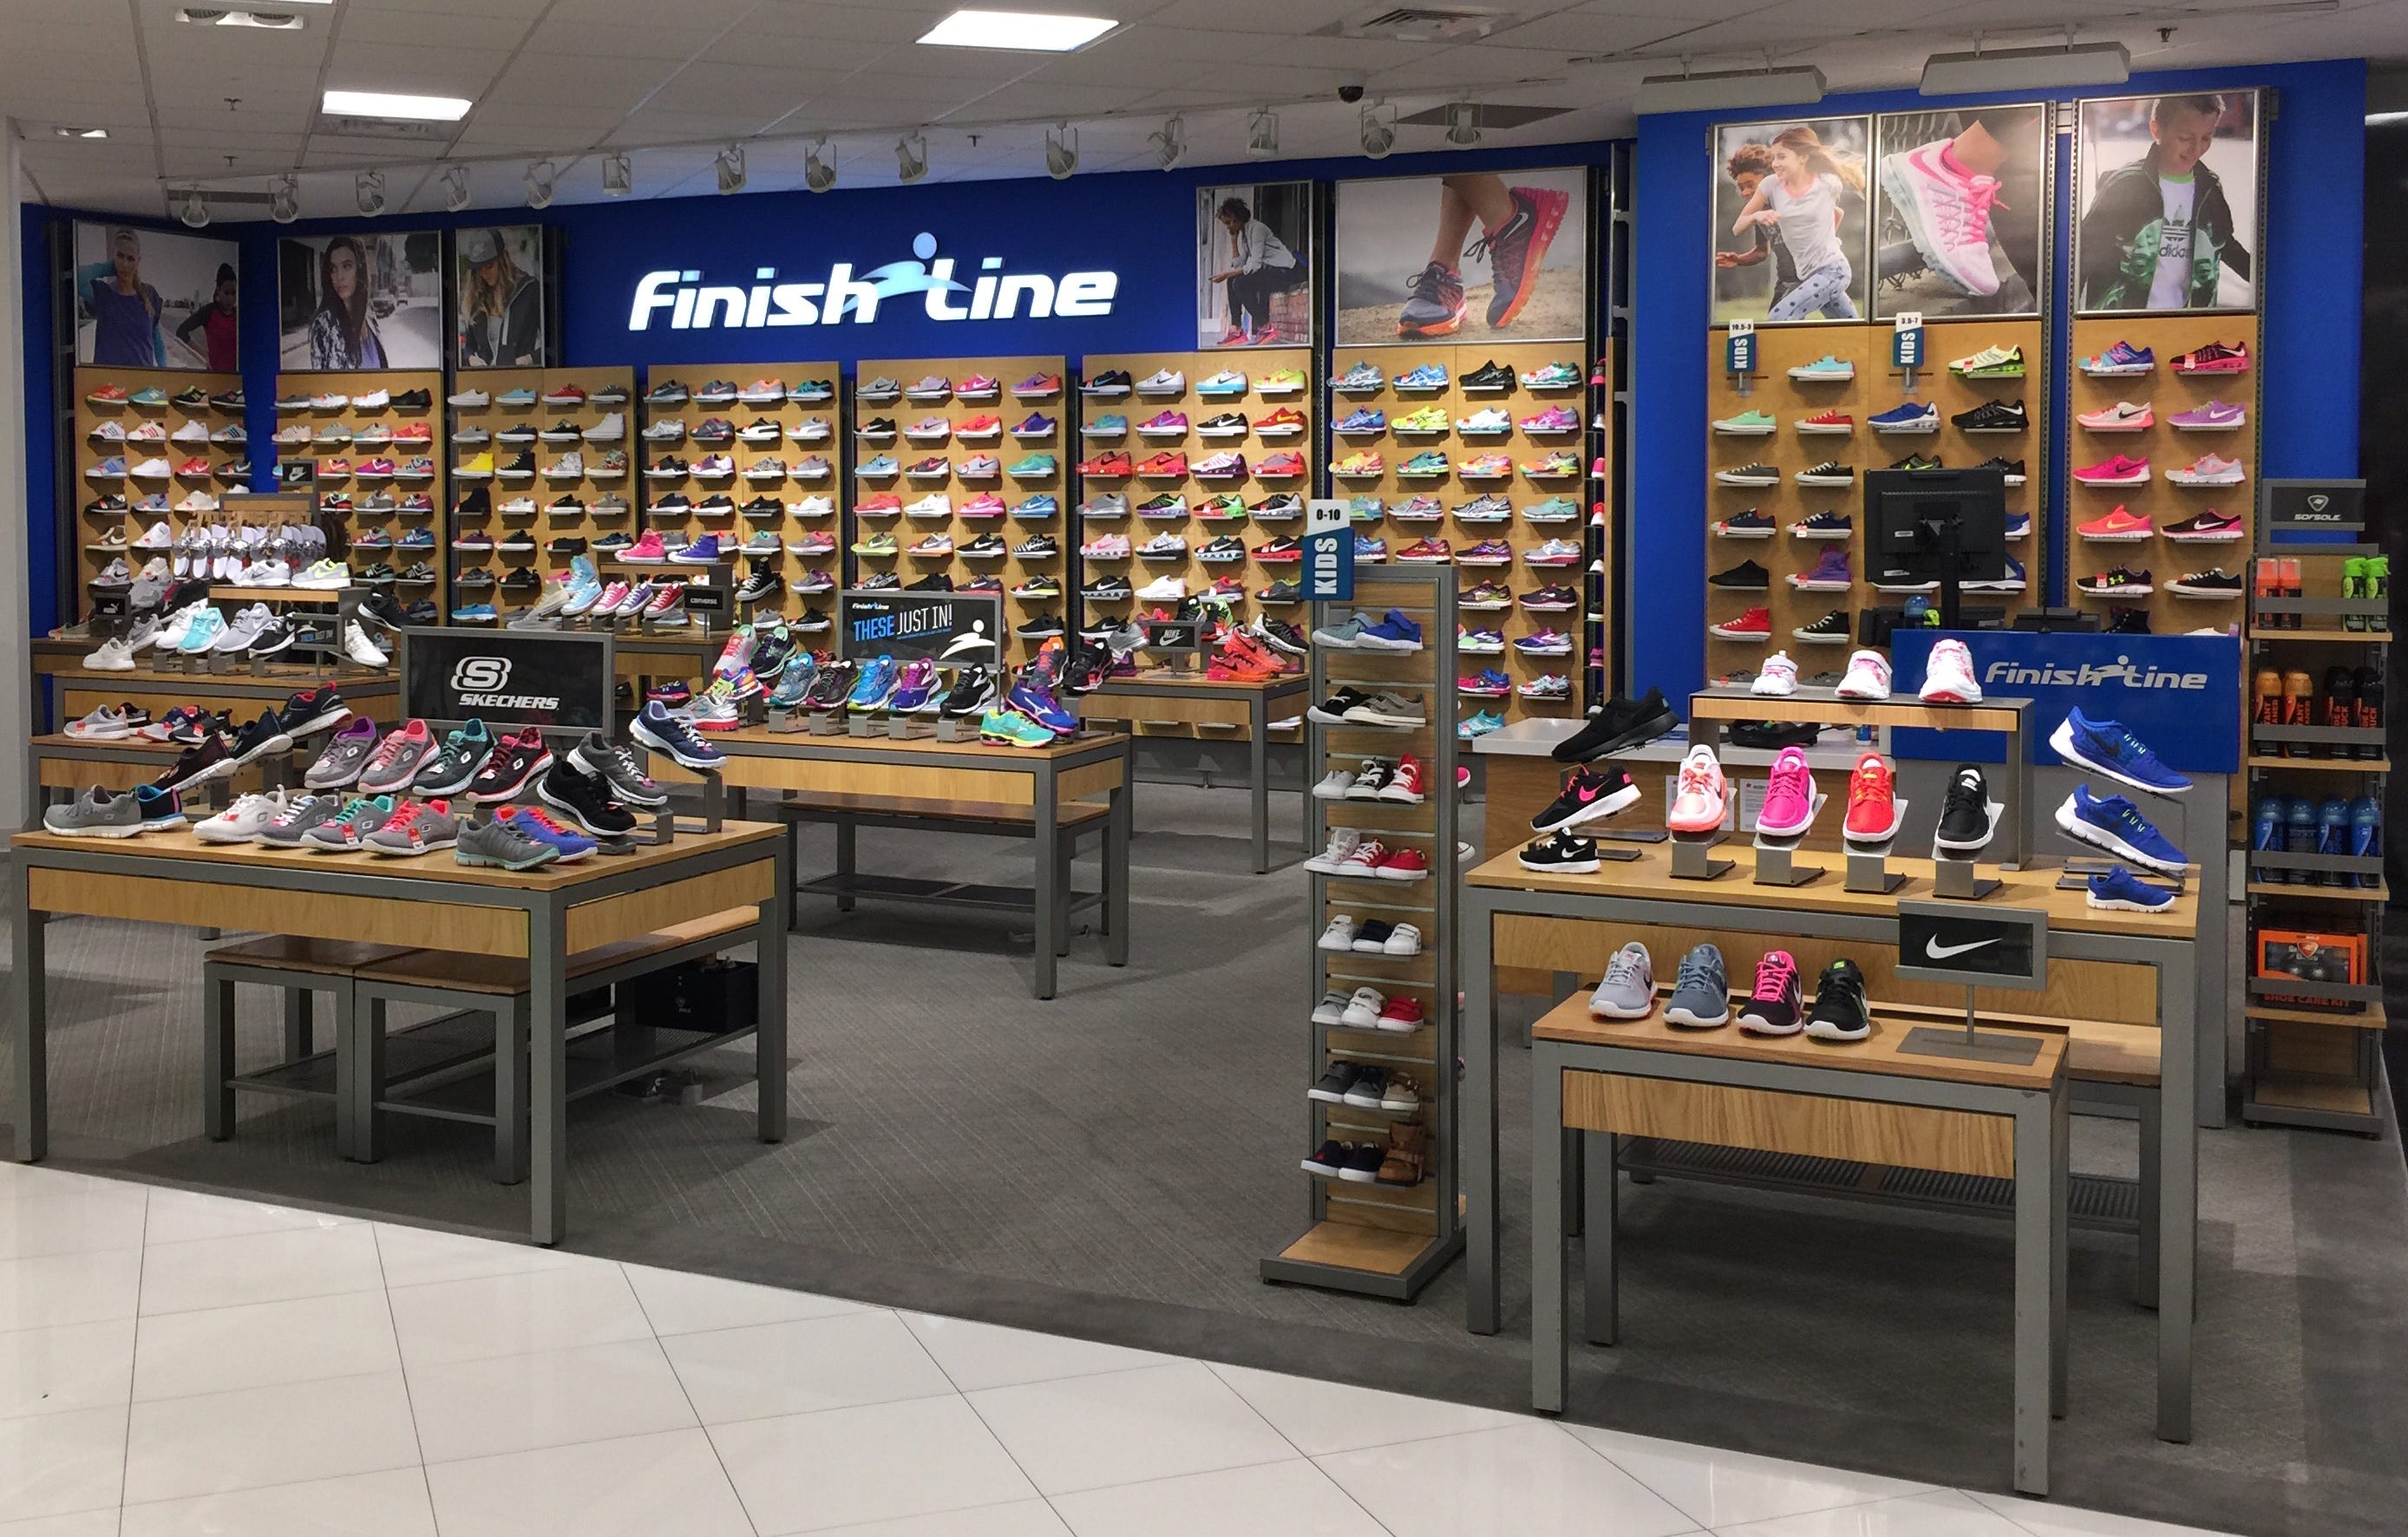 shoe stores like finish line